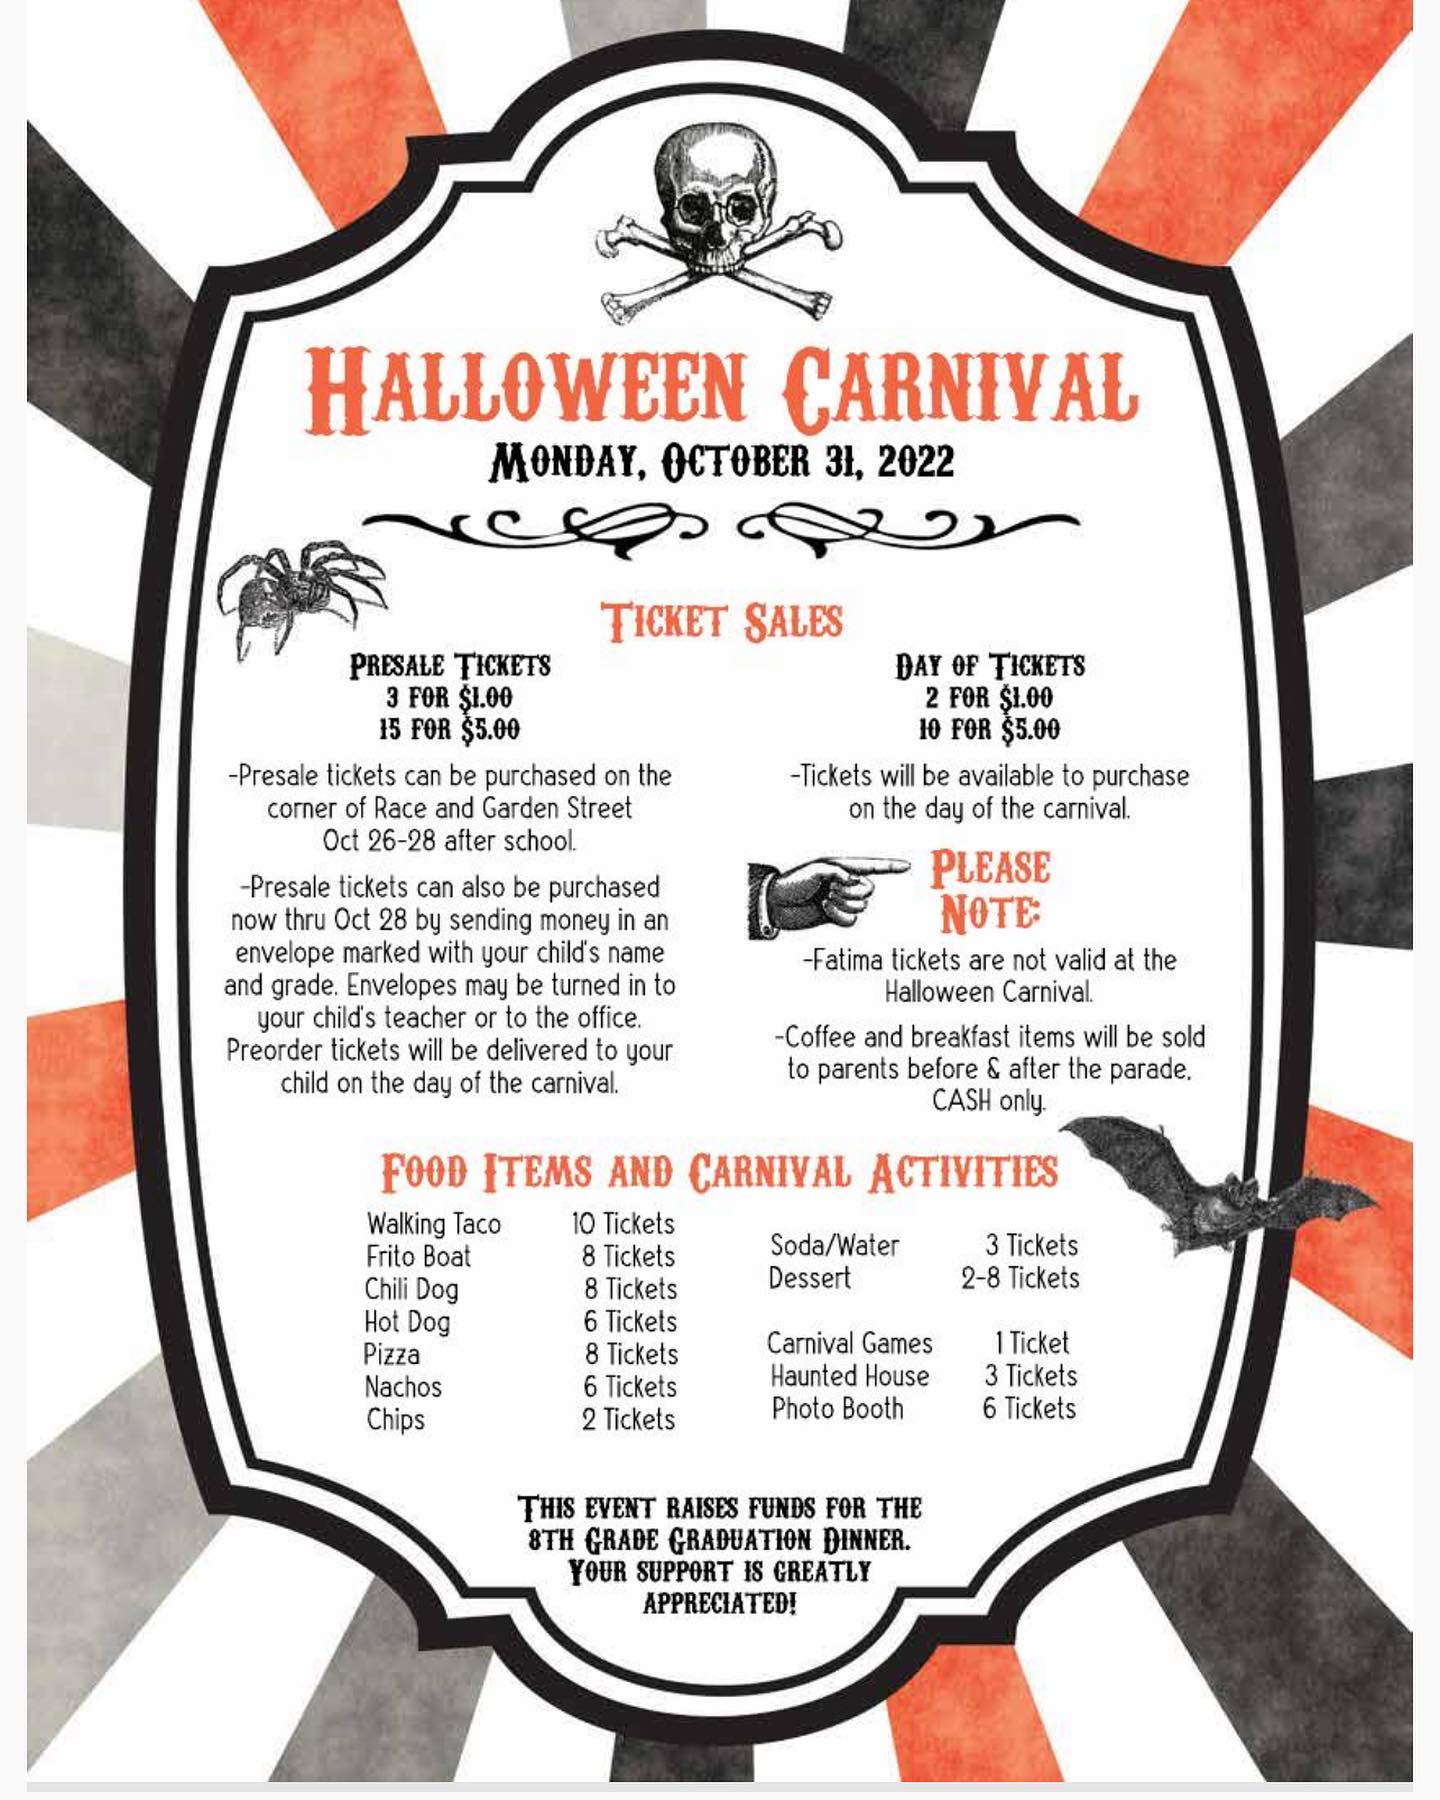 Halloween Carnival Information